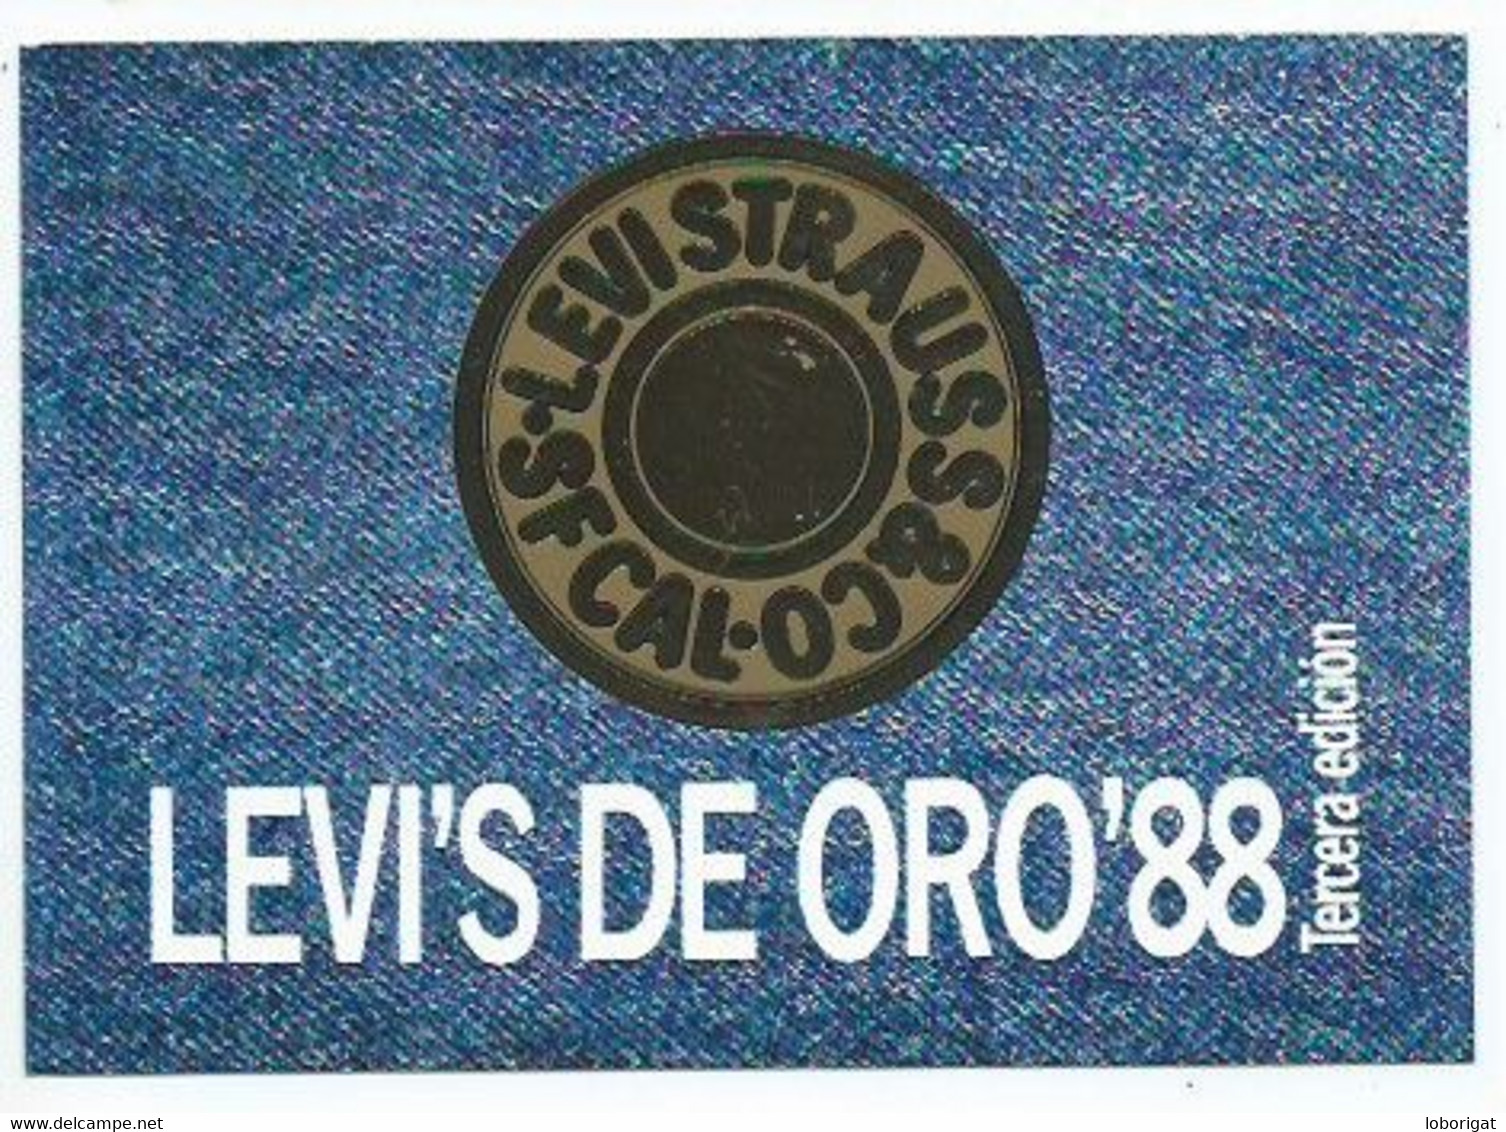 " LEVI'S DE ORO'88 ".- DISCOTECA JOY ESLAVA - MADRID - Inaugurations